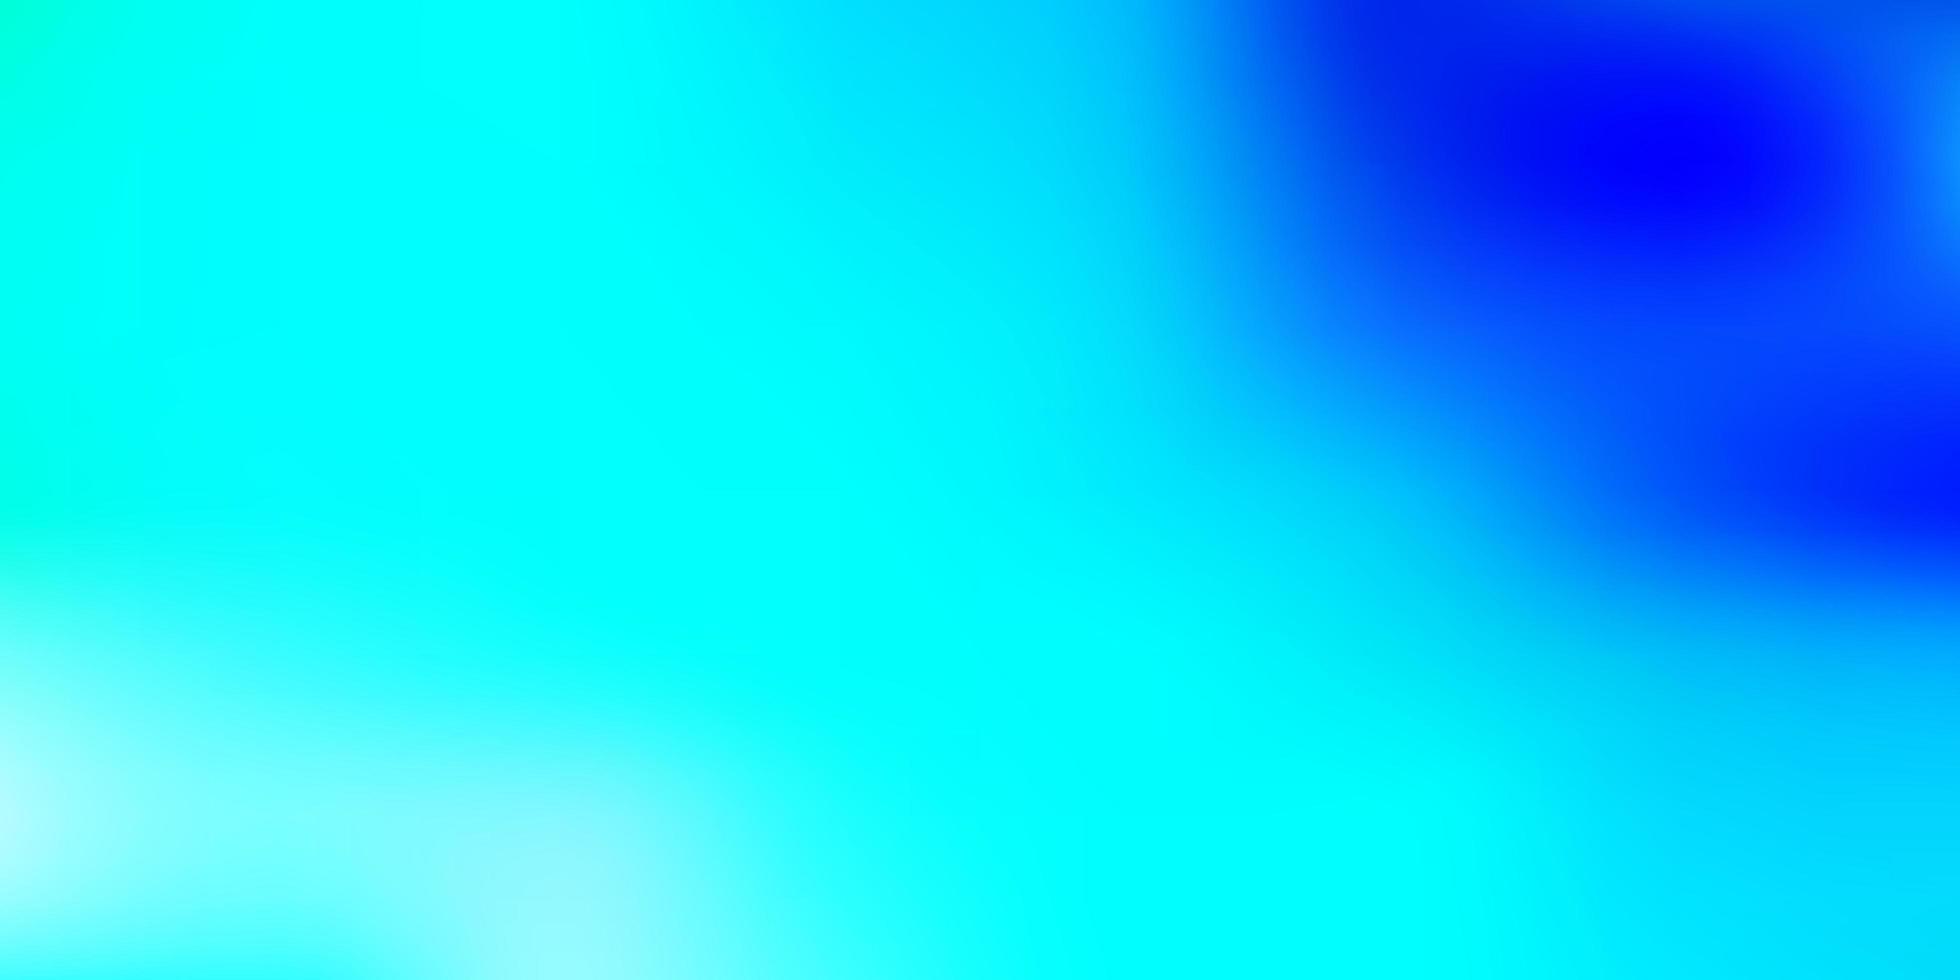 Light blue, green vector blurred background.